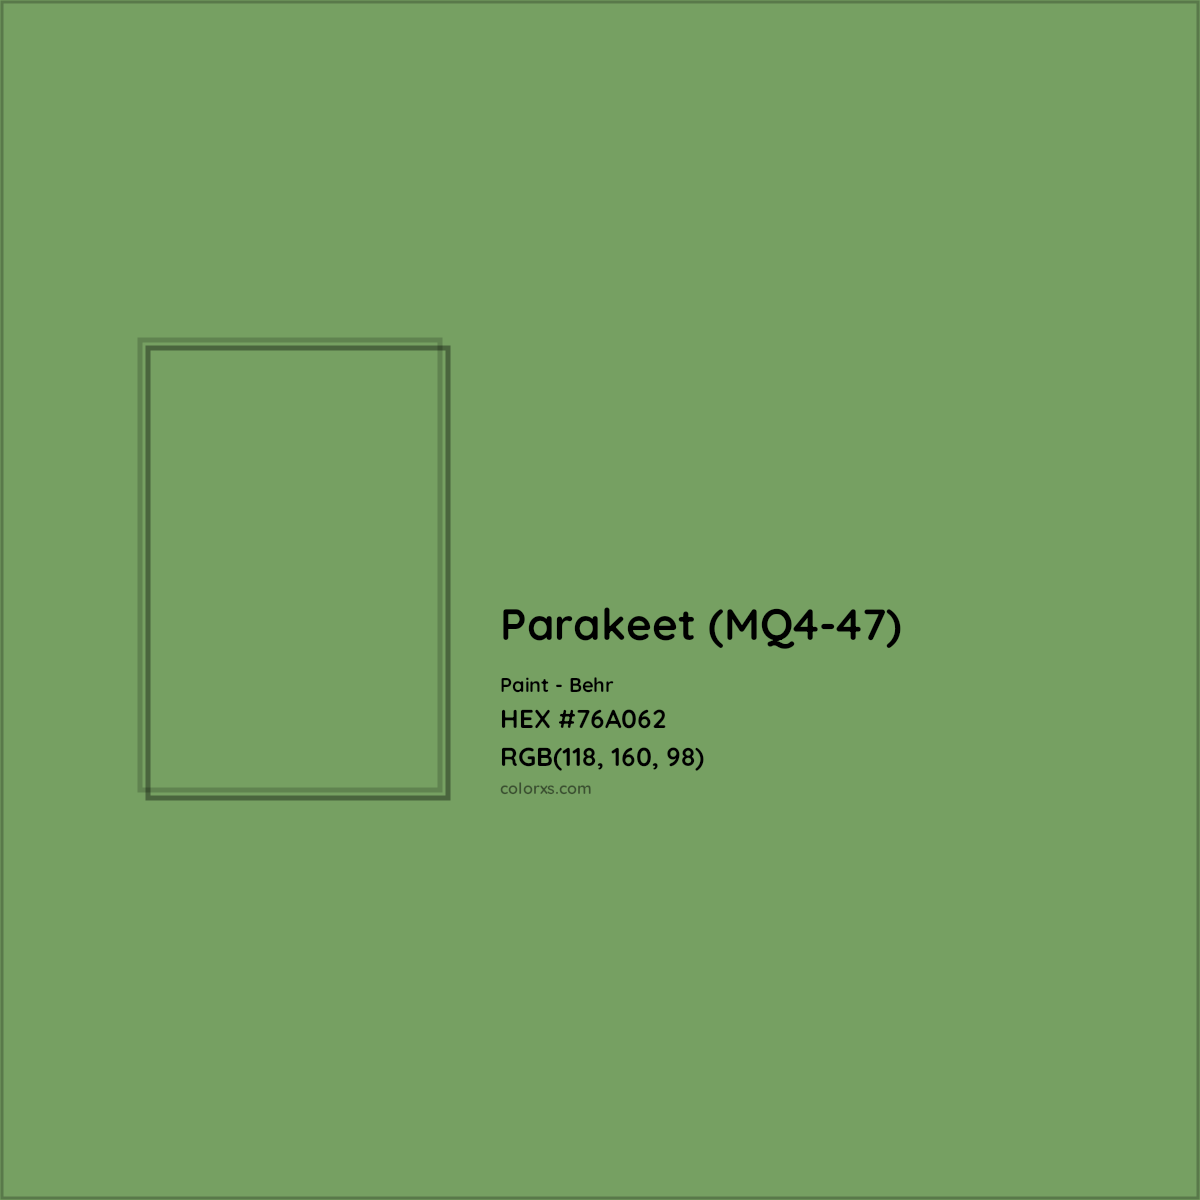 HEX #76A062 Parakeet (MQ4-47) Paint Behr - Color Code